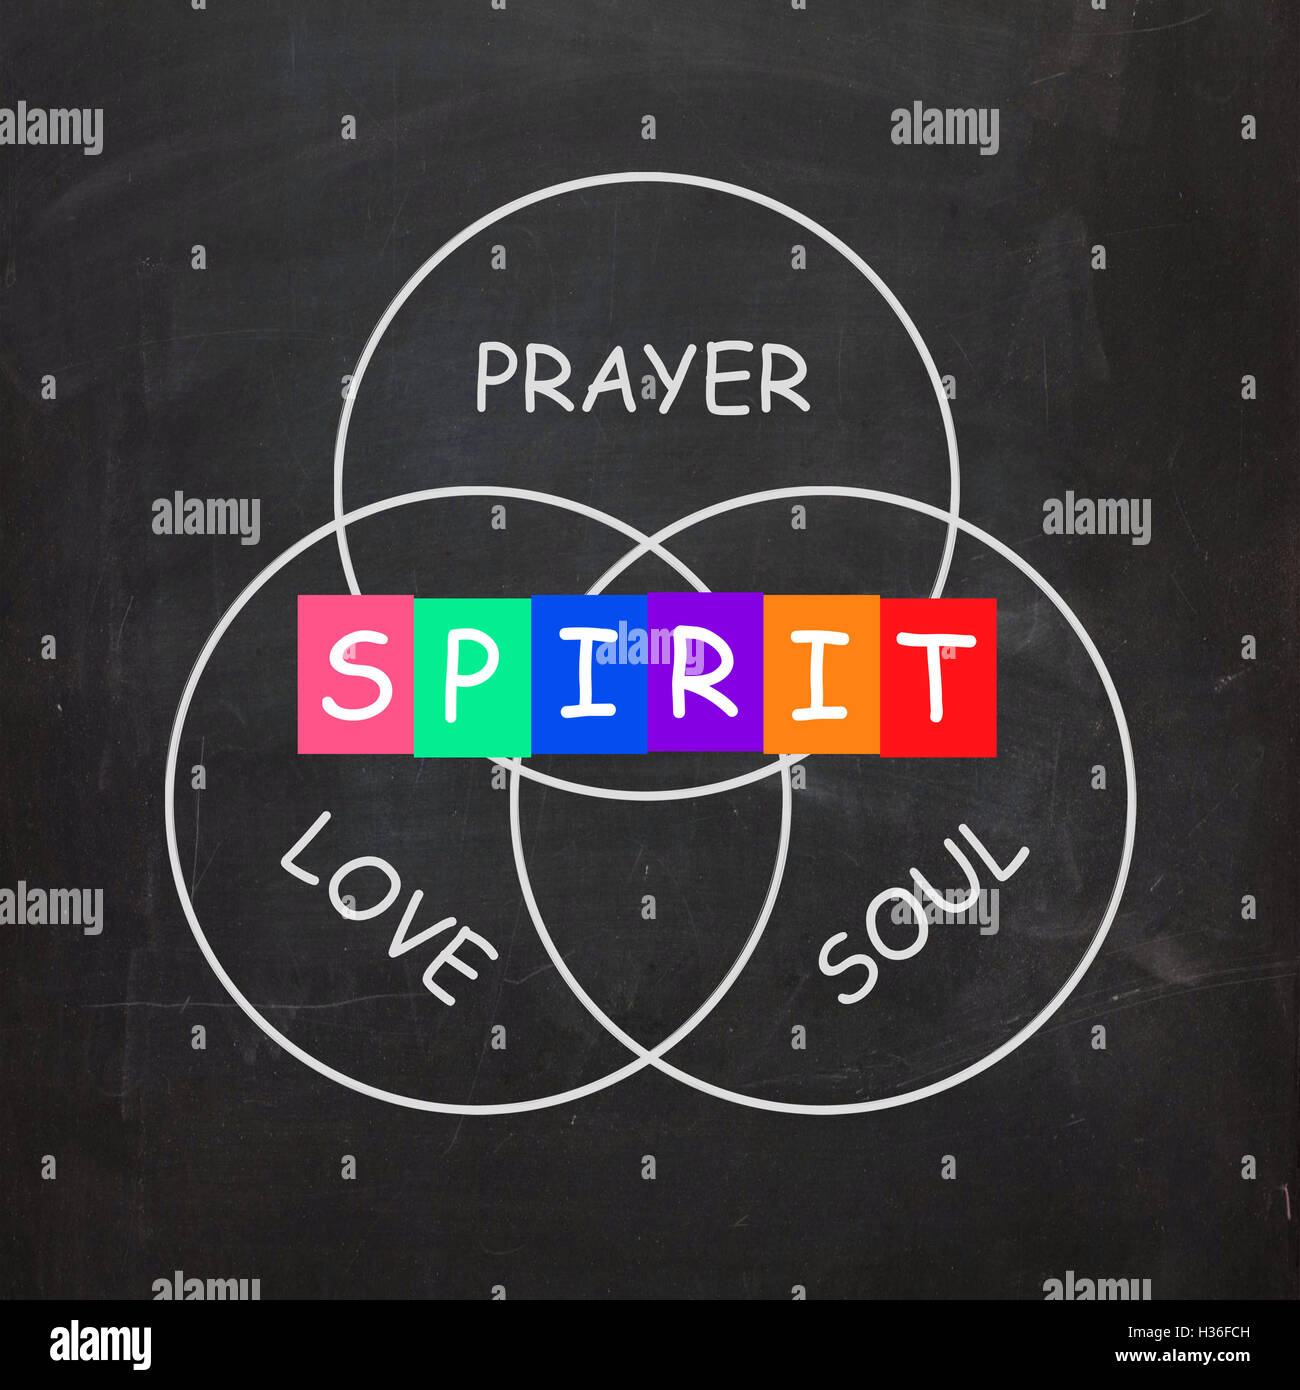 Spiritual Words Include Prayer Love Soul and Spirit Stock Photo